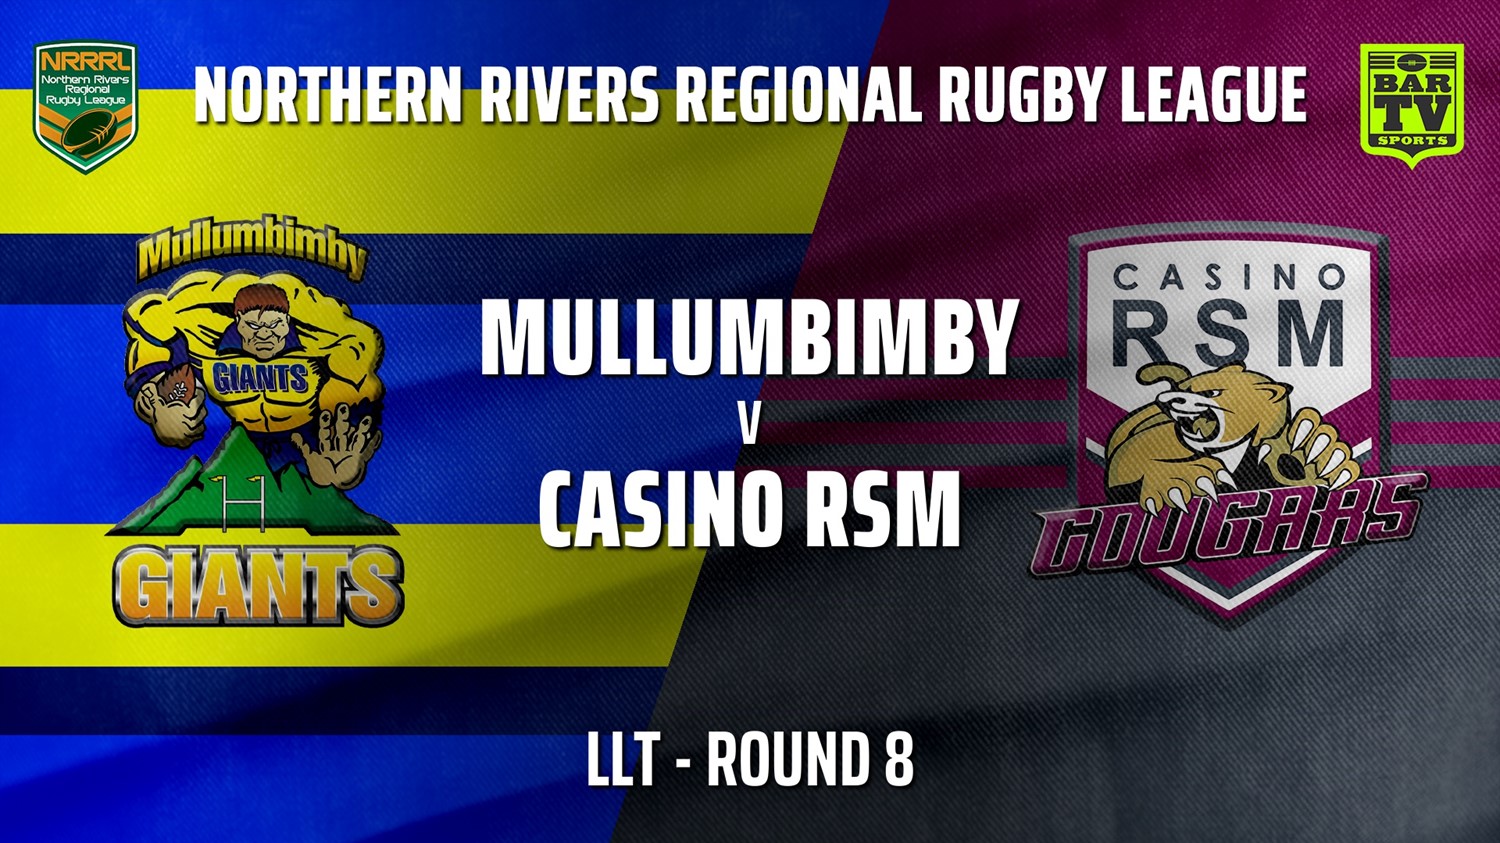 210627-Northern Rivers Round 8 - LLT - Mullumbimby Giants v Casino RSM Cougars Slate Image